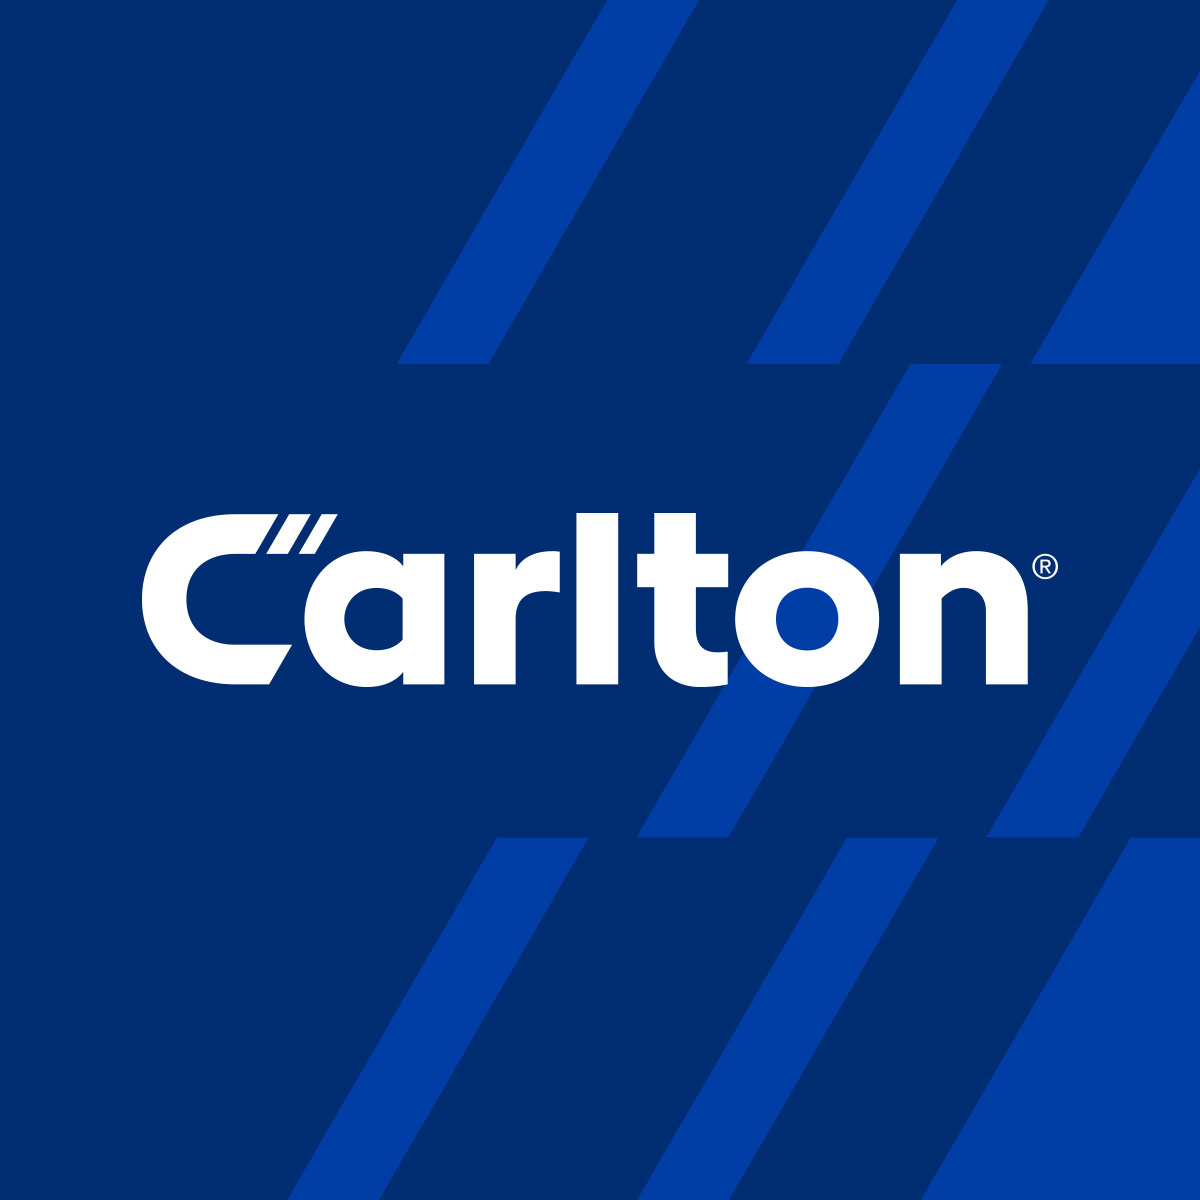 Carlton Co Inc